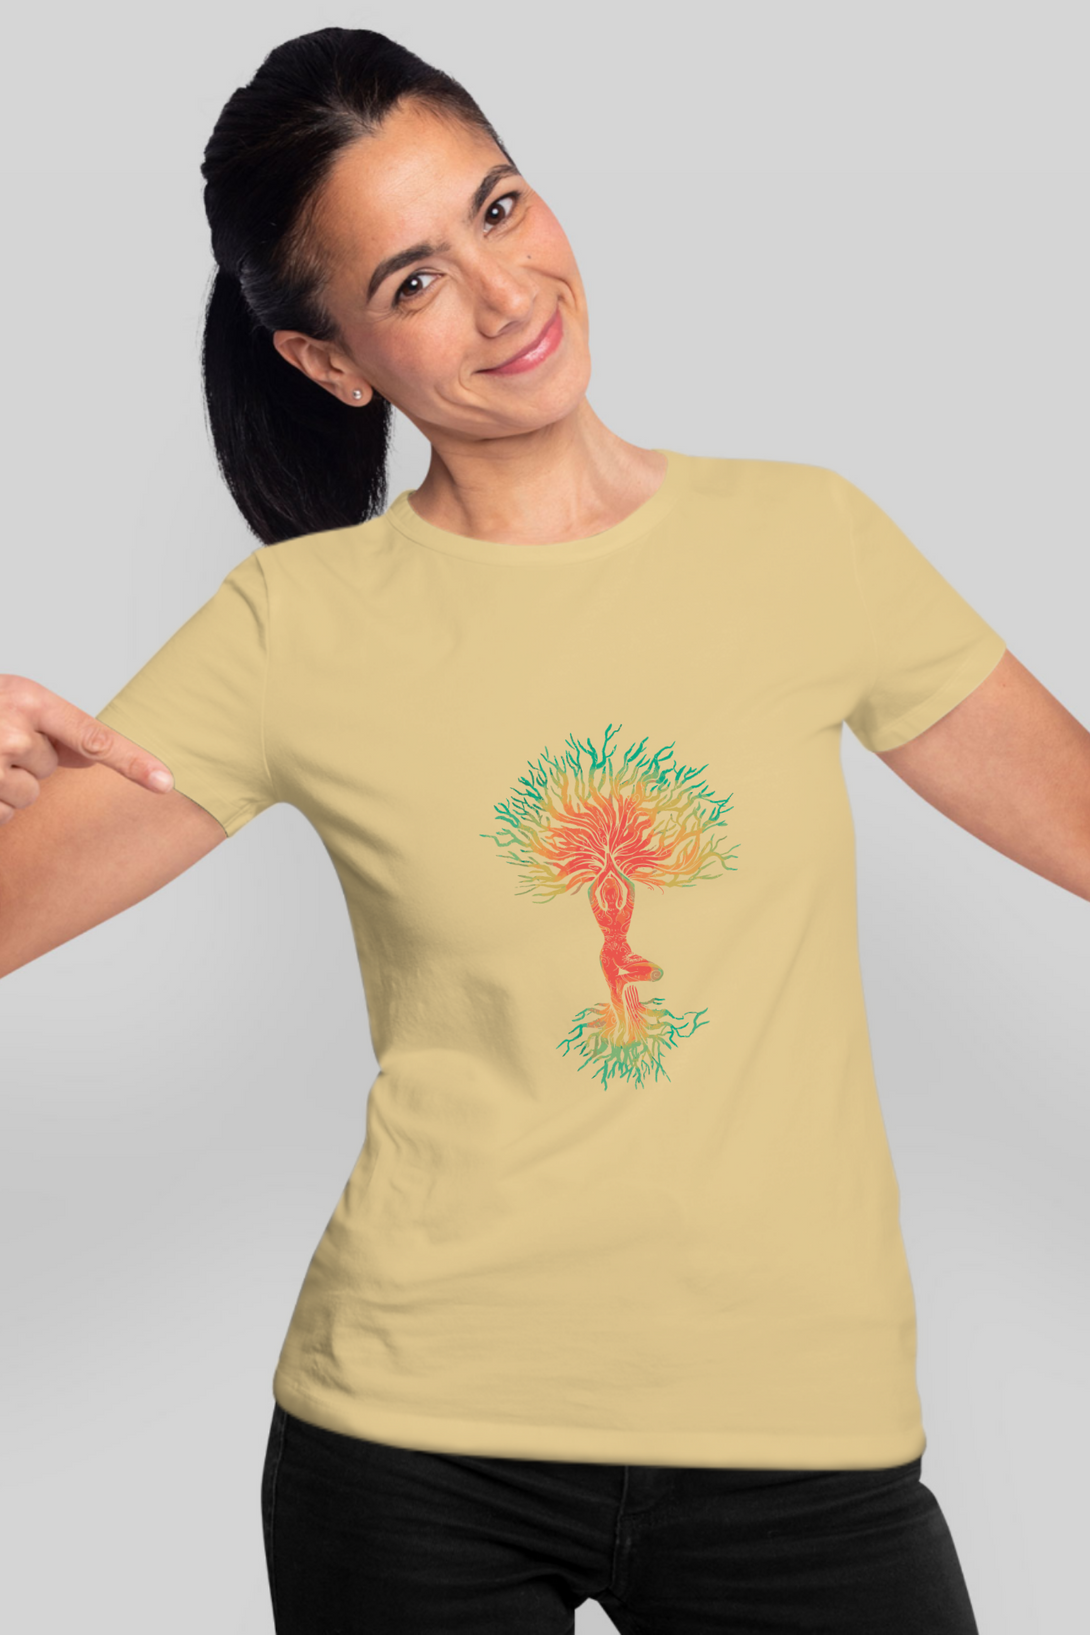 Yoga Tree Printed T-Shirt For Women - WowWaves - 11